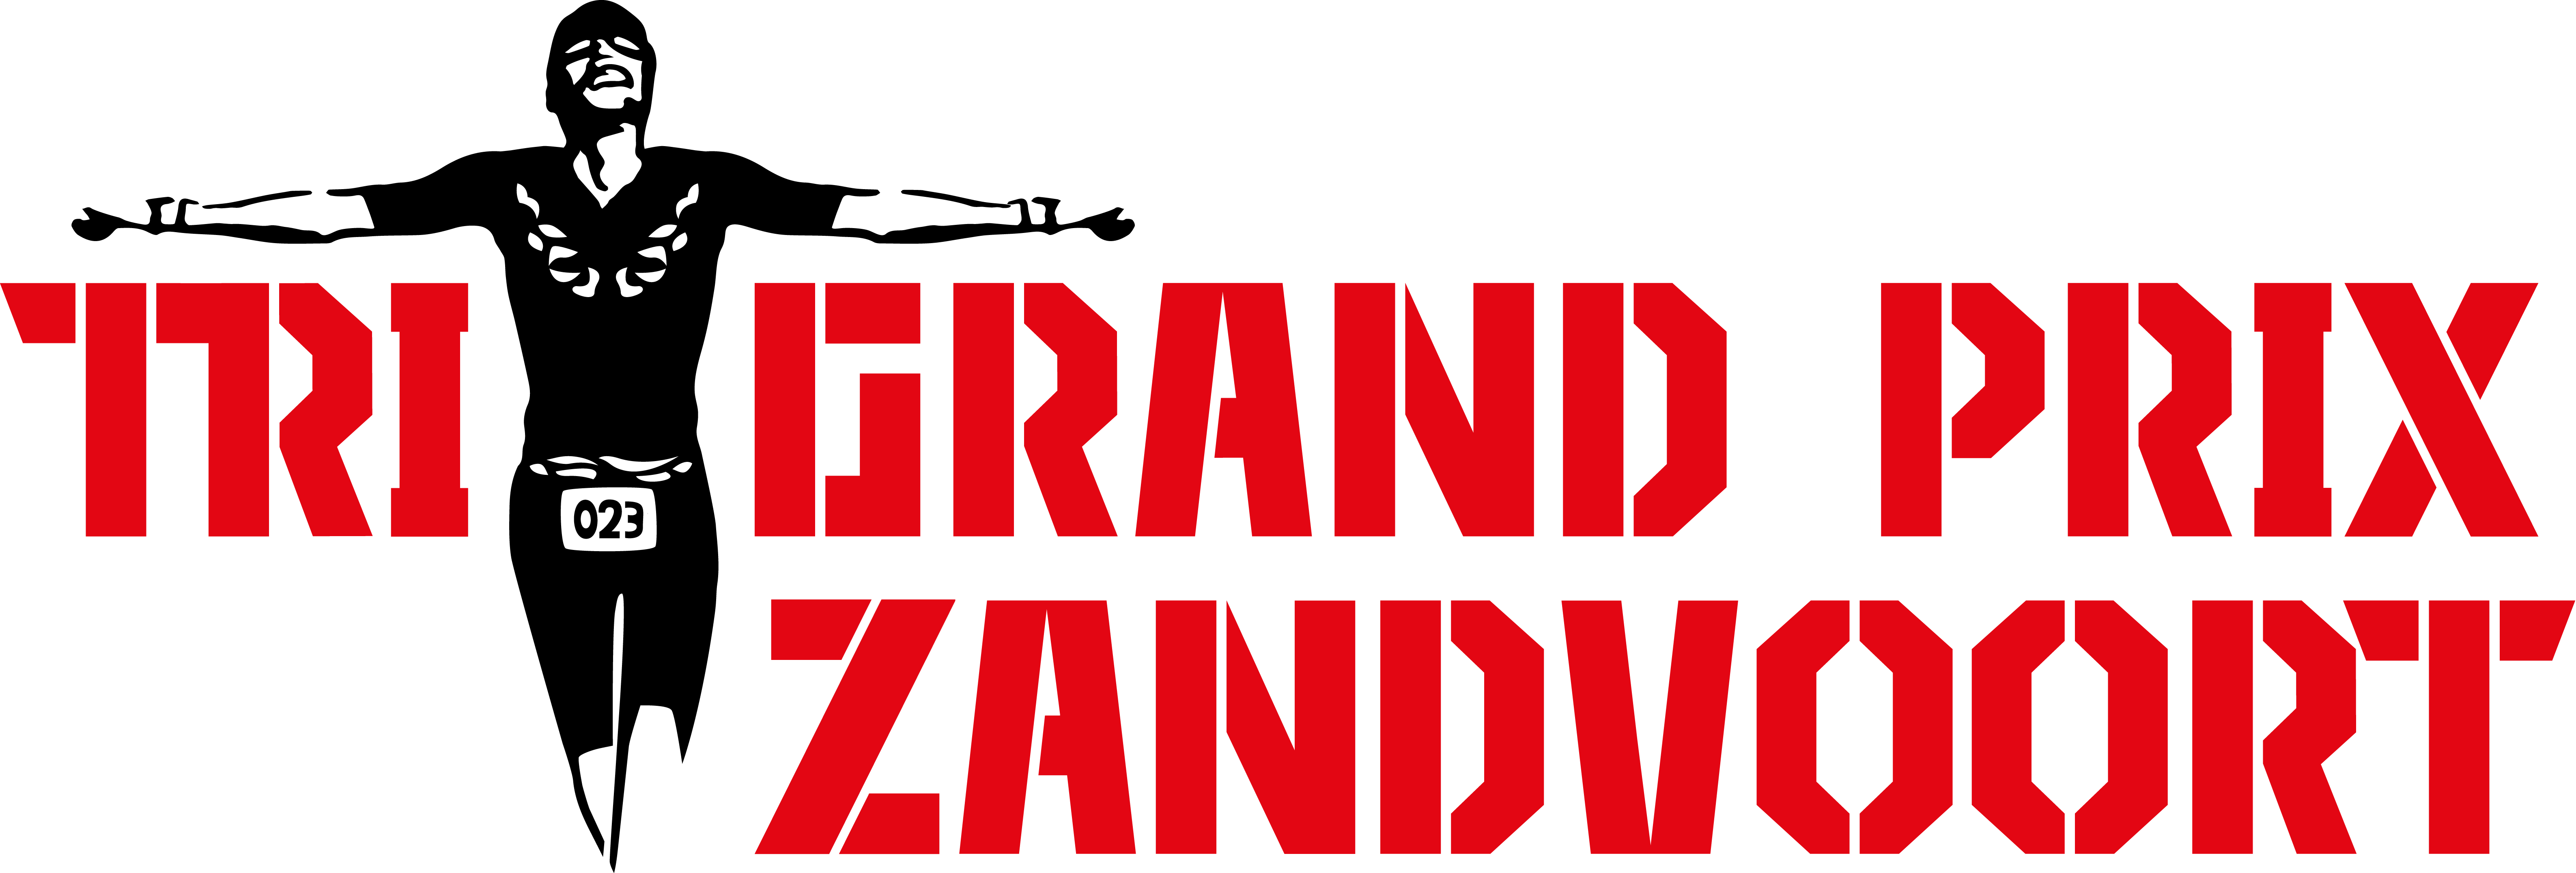 TRI GRAND PRIX ZANDVOORT – Een TRI HARD series evenement